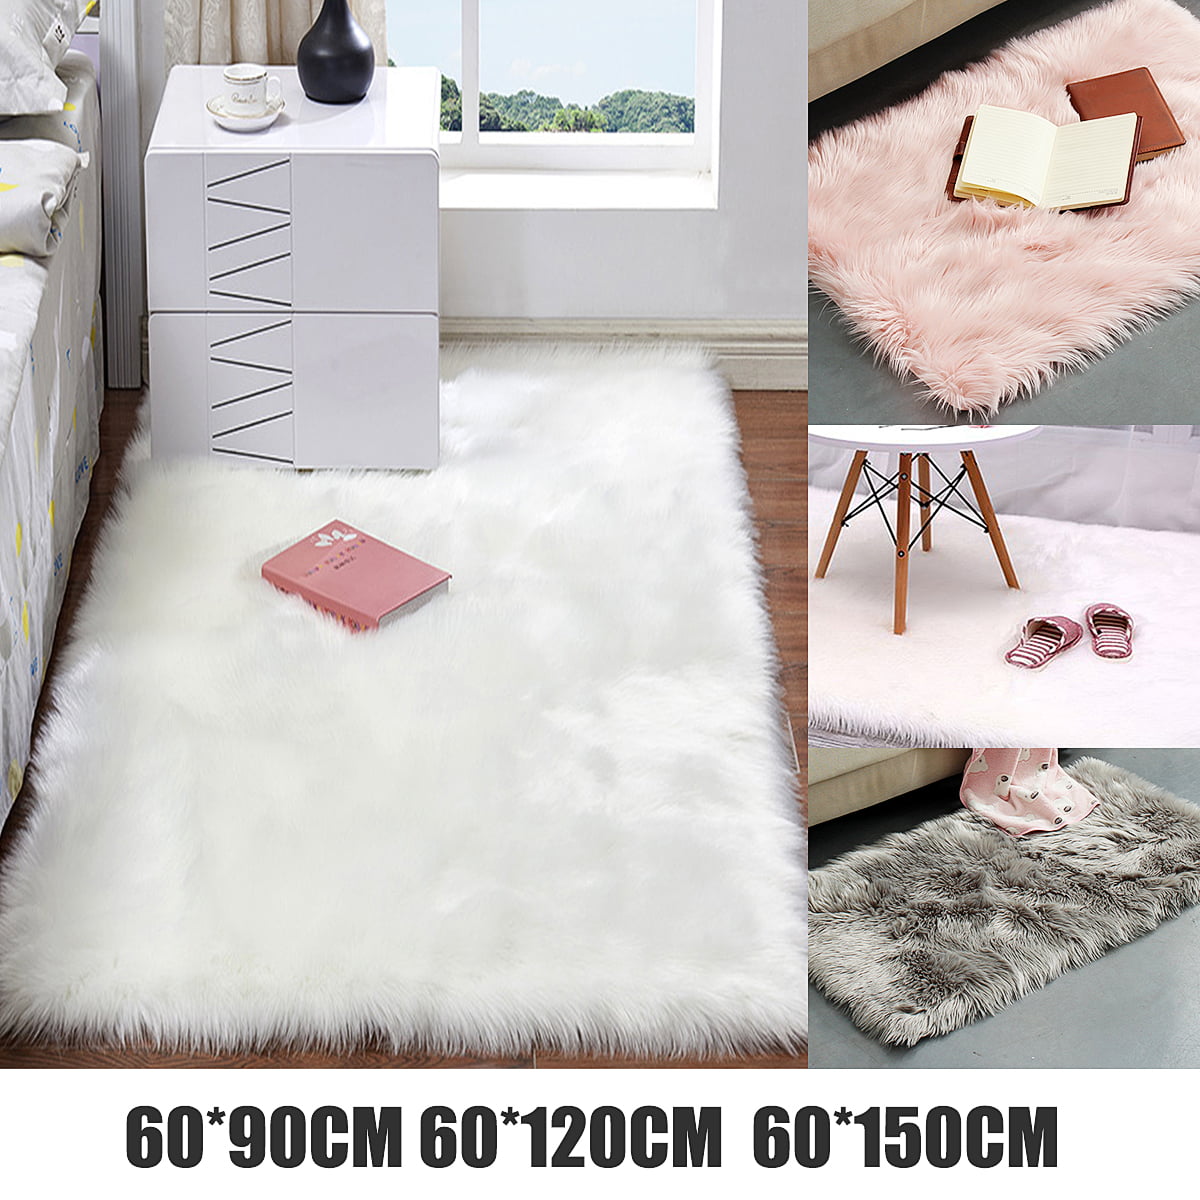 Fluffy Rugs Anti-Skid Shaggy Area Rug Home Bedroom Carpet Floor Mat 60x120cm 